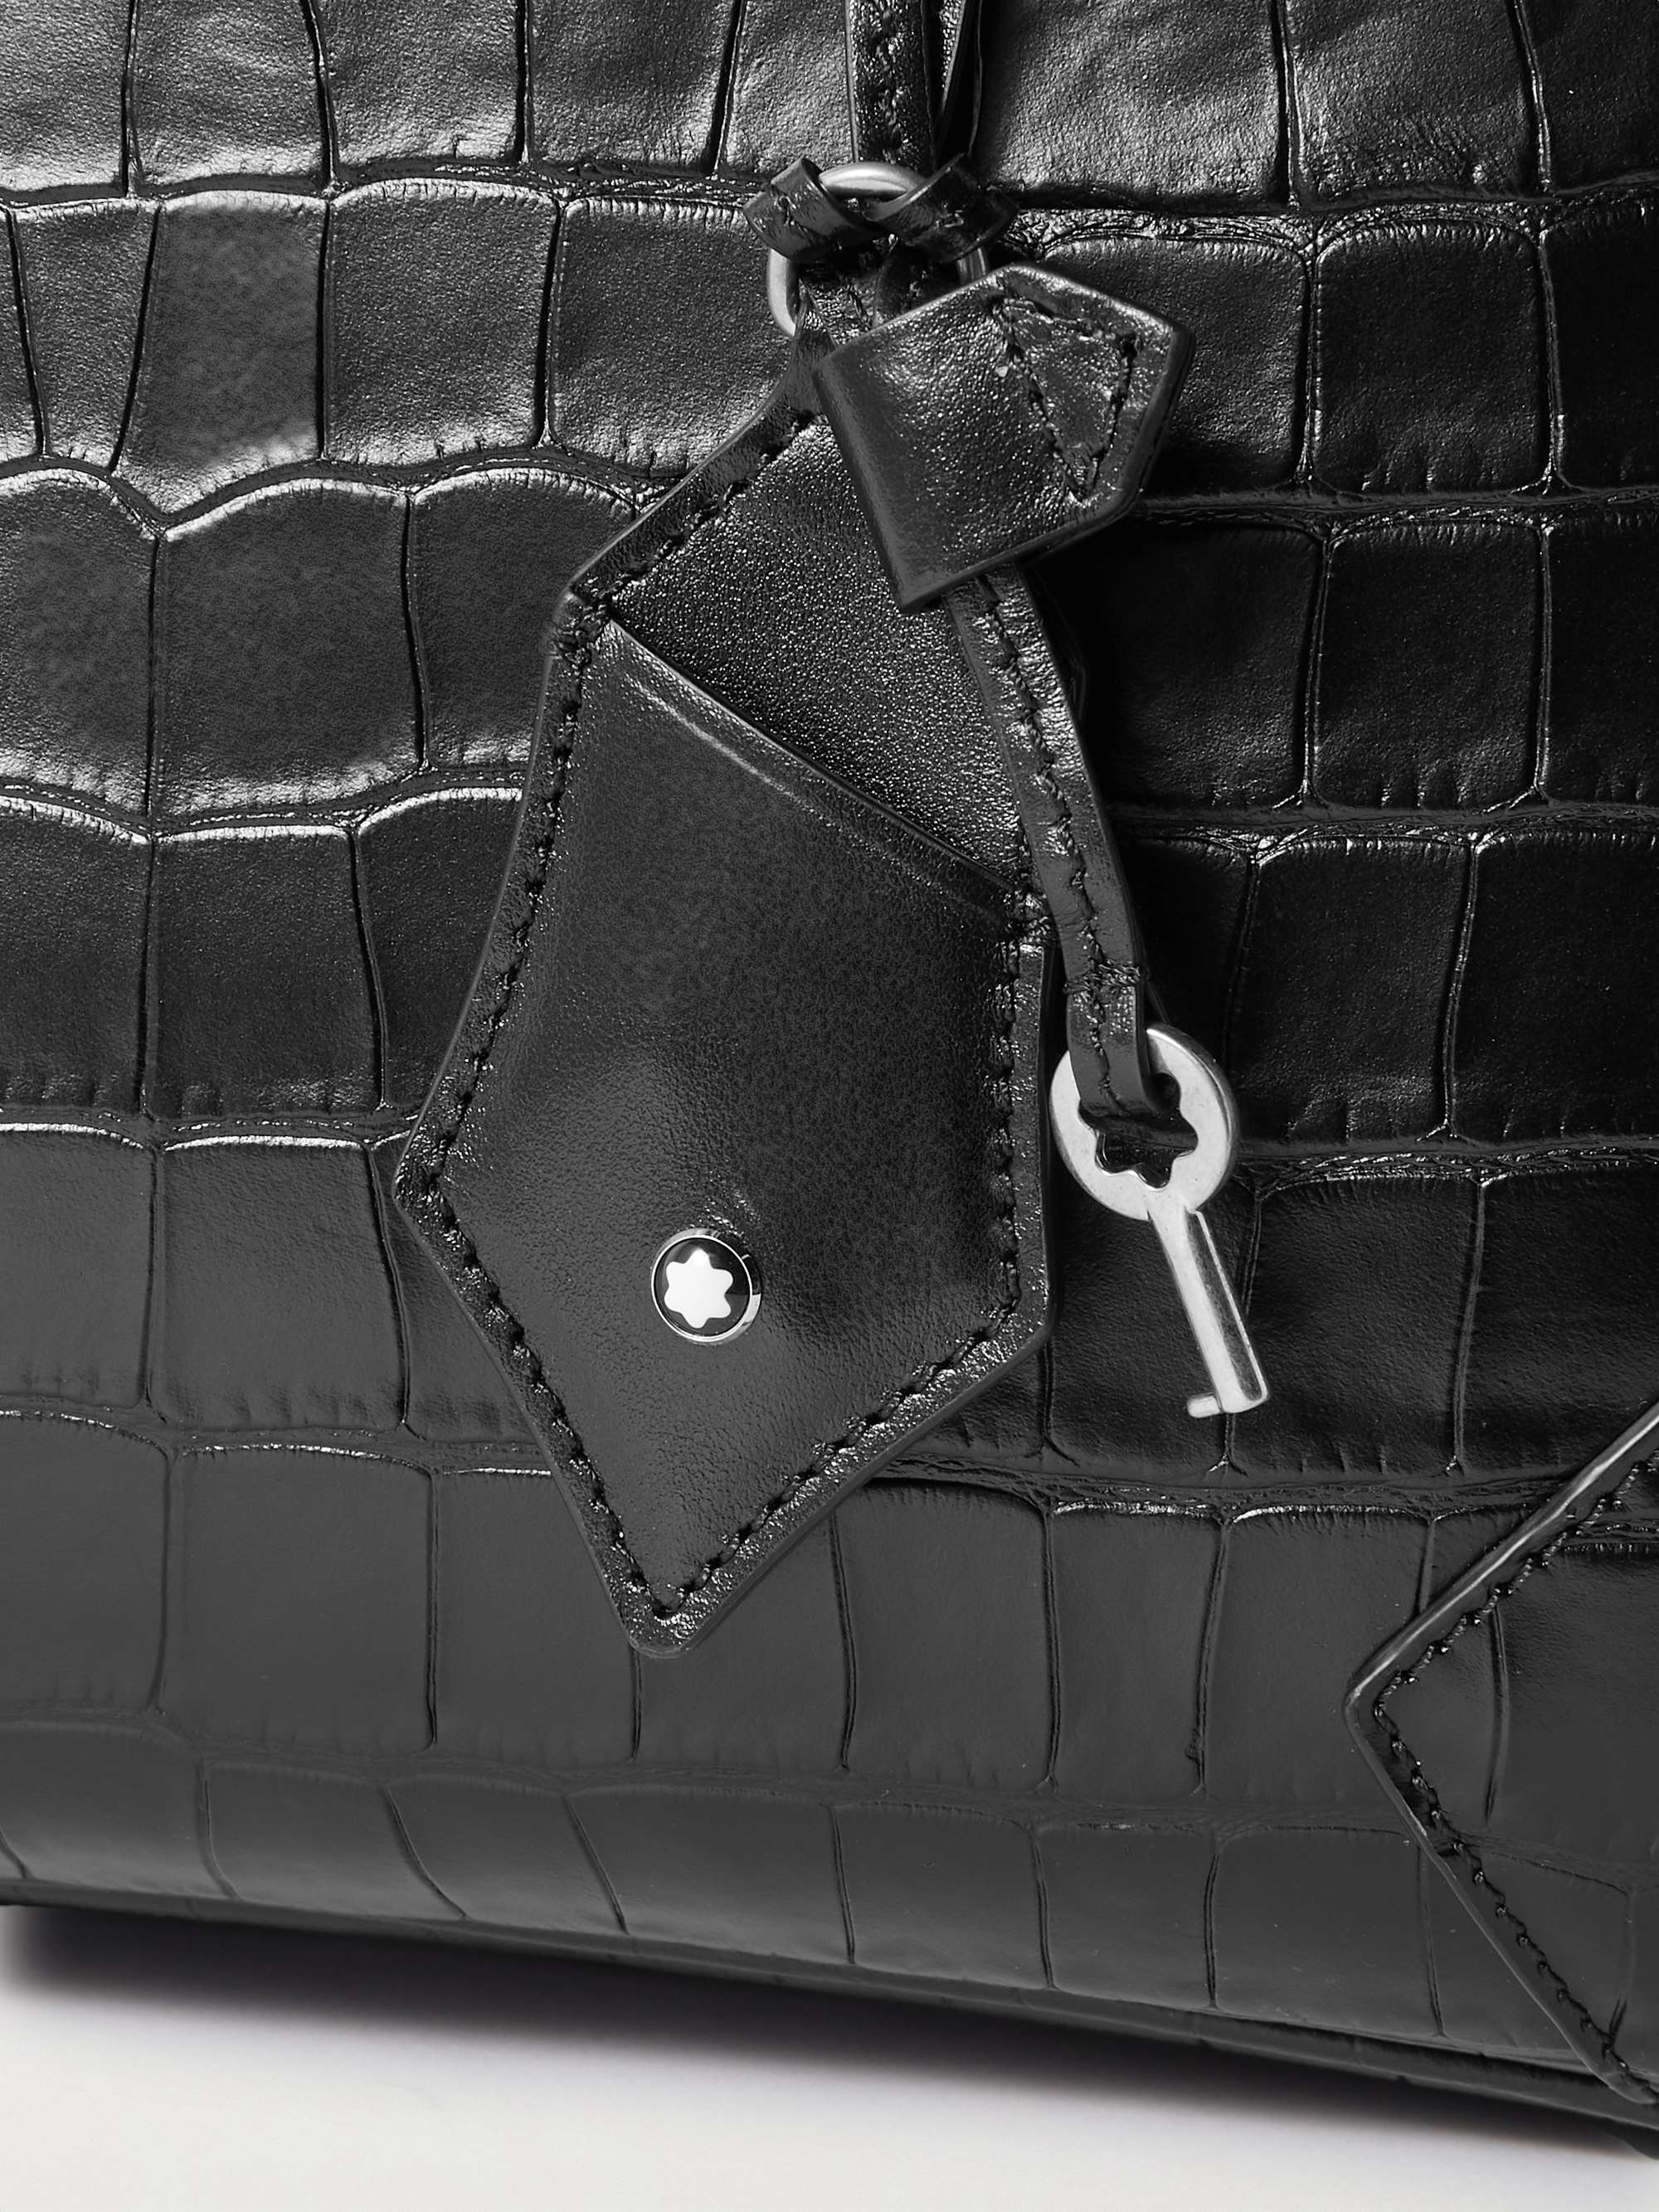 MONTBLANC Meisterstück Croc-Effect Leather Duffle Bag